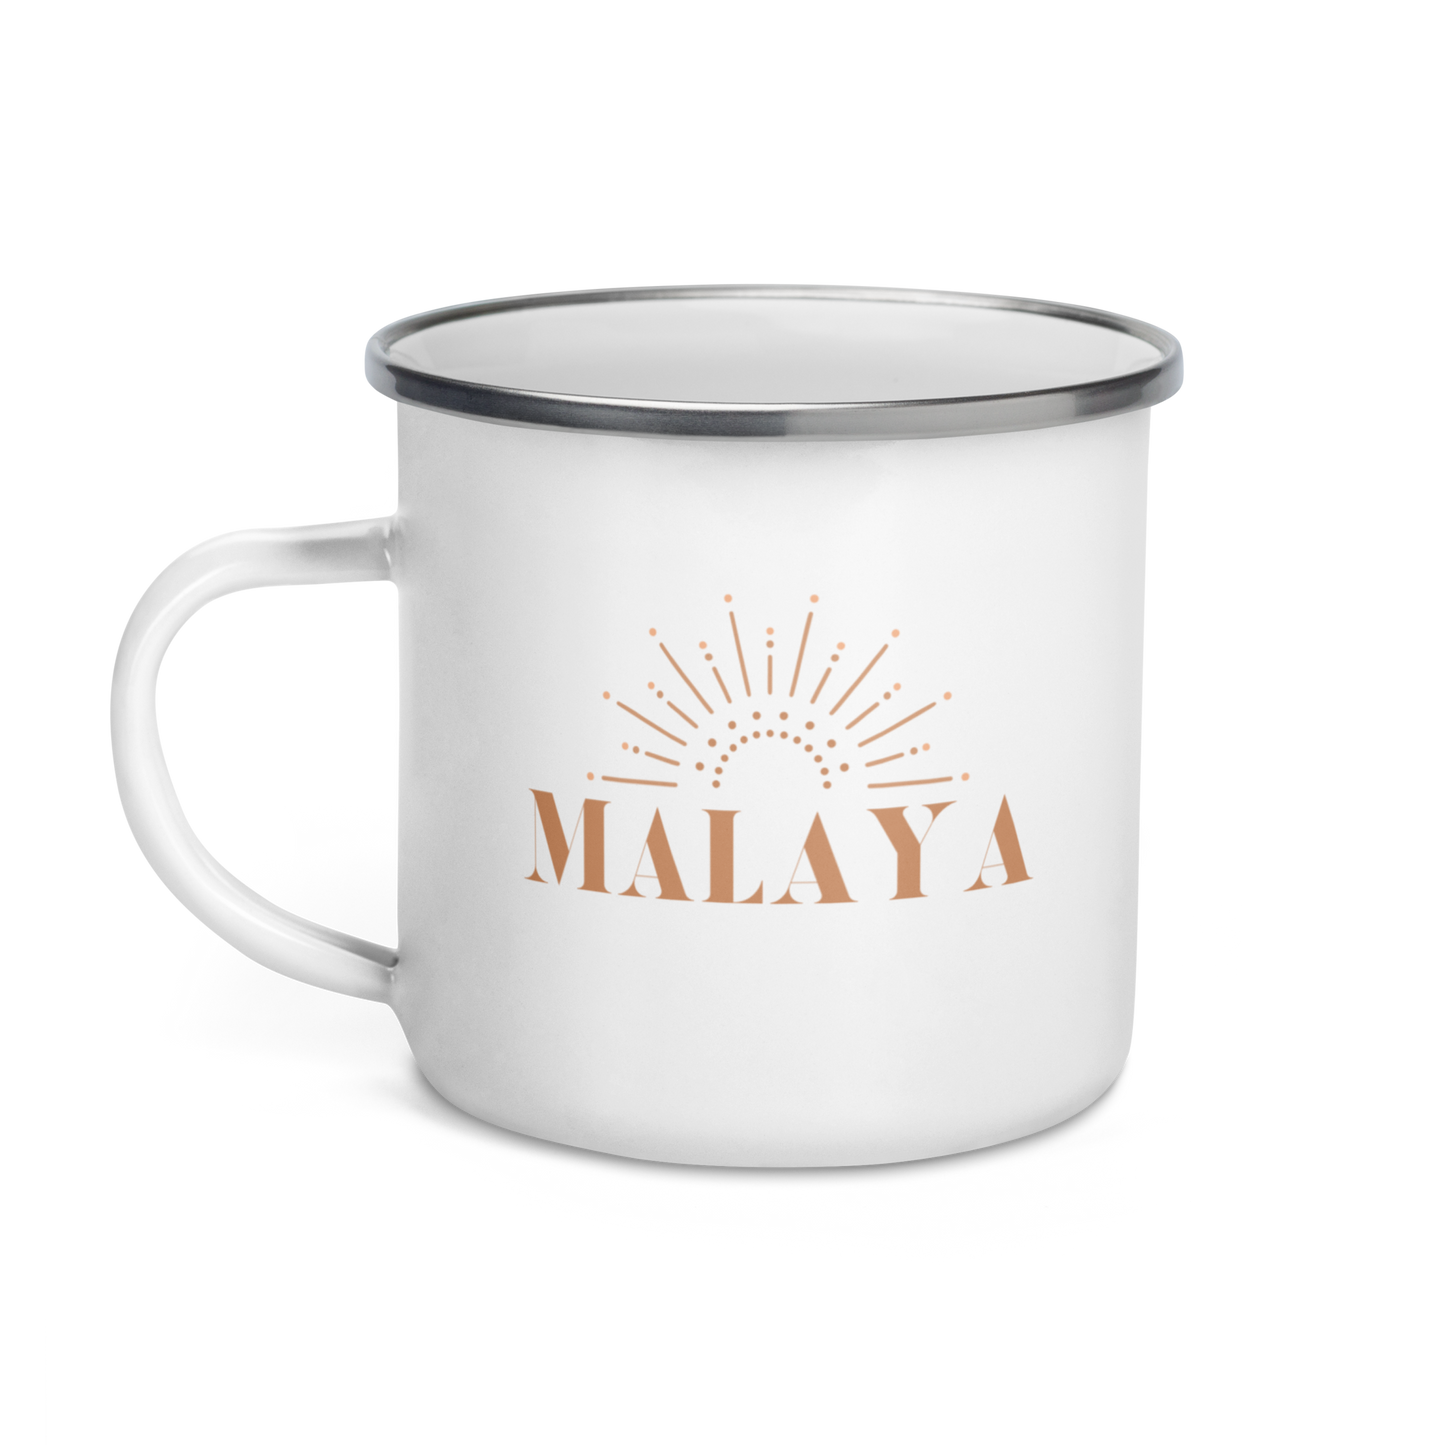 MALAYA Camping Mug